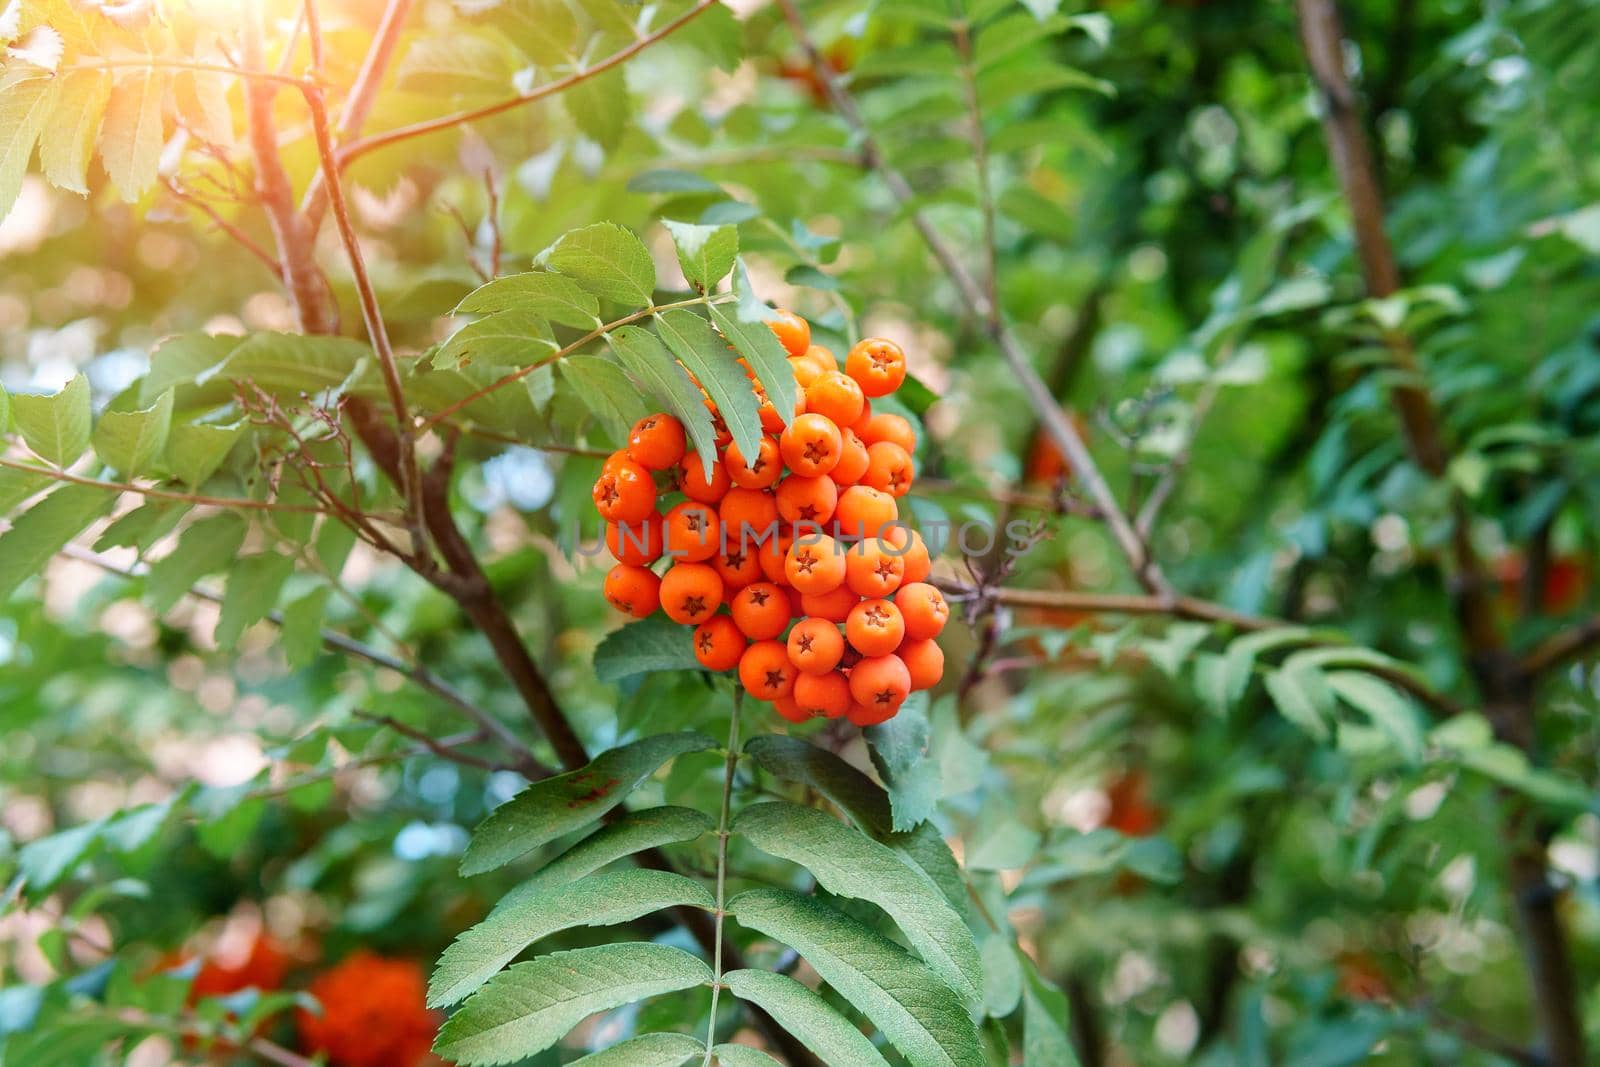 Harvest concept. Autumn rowan berries on branch. Rowan berries sour but rich vitamin C. by darksoul72